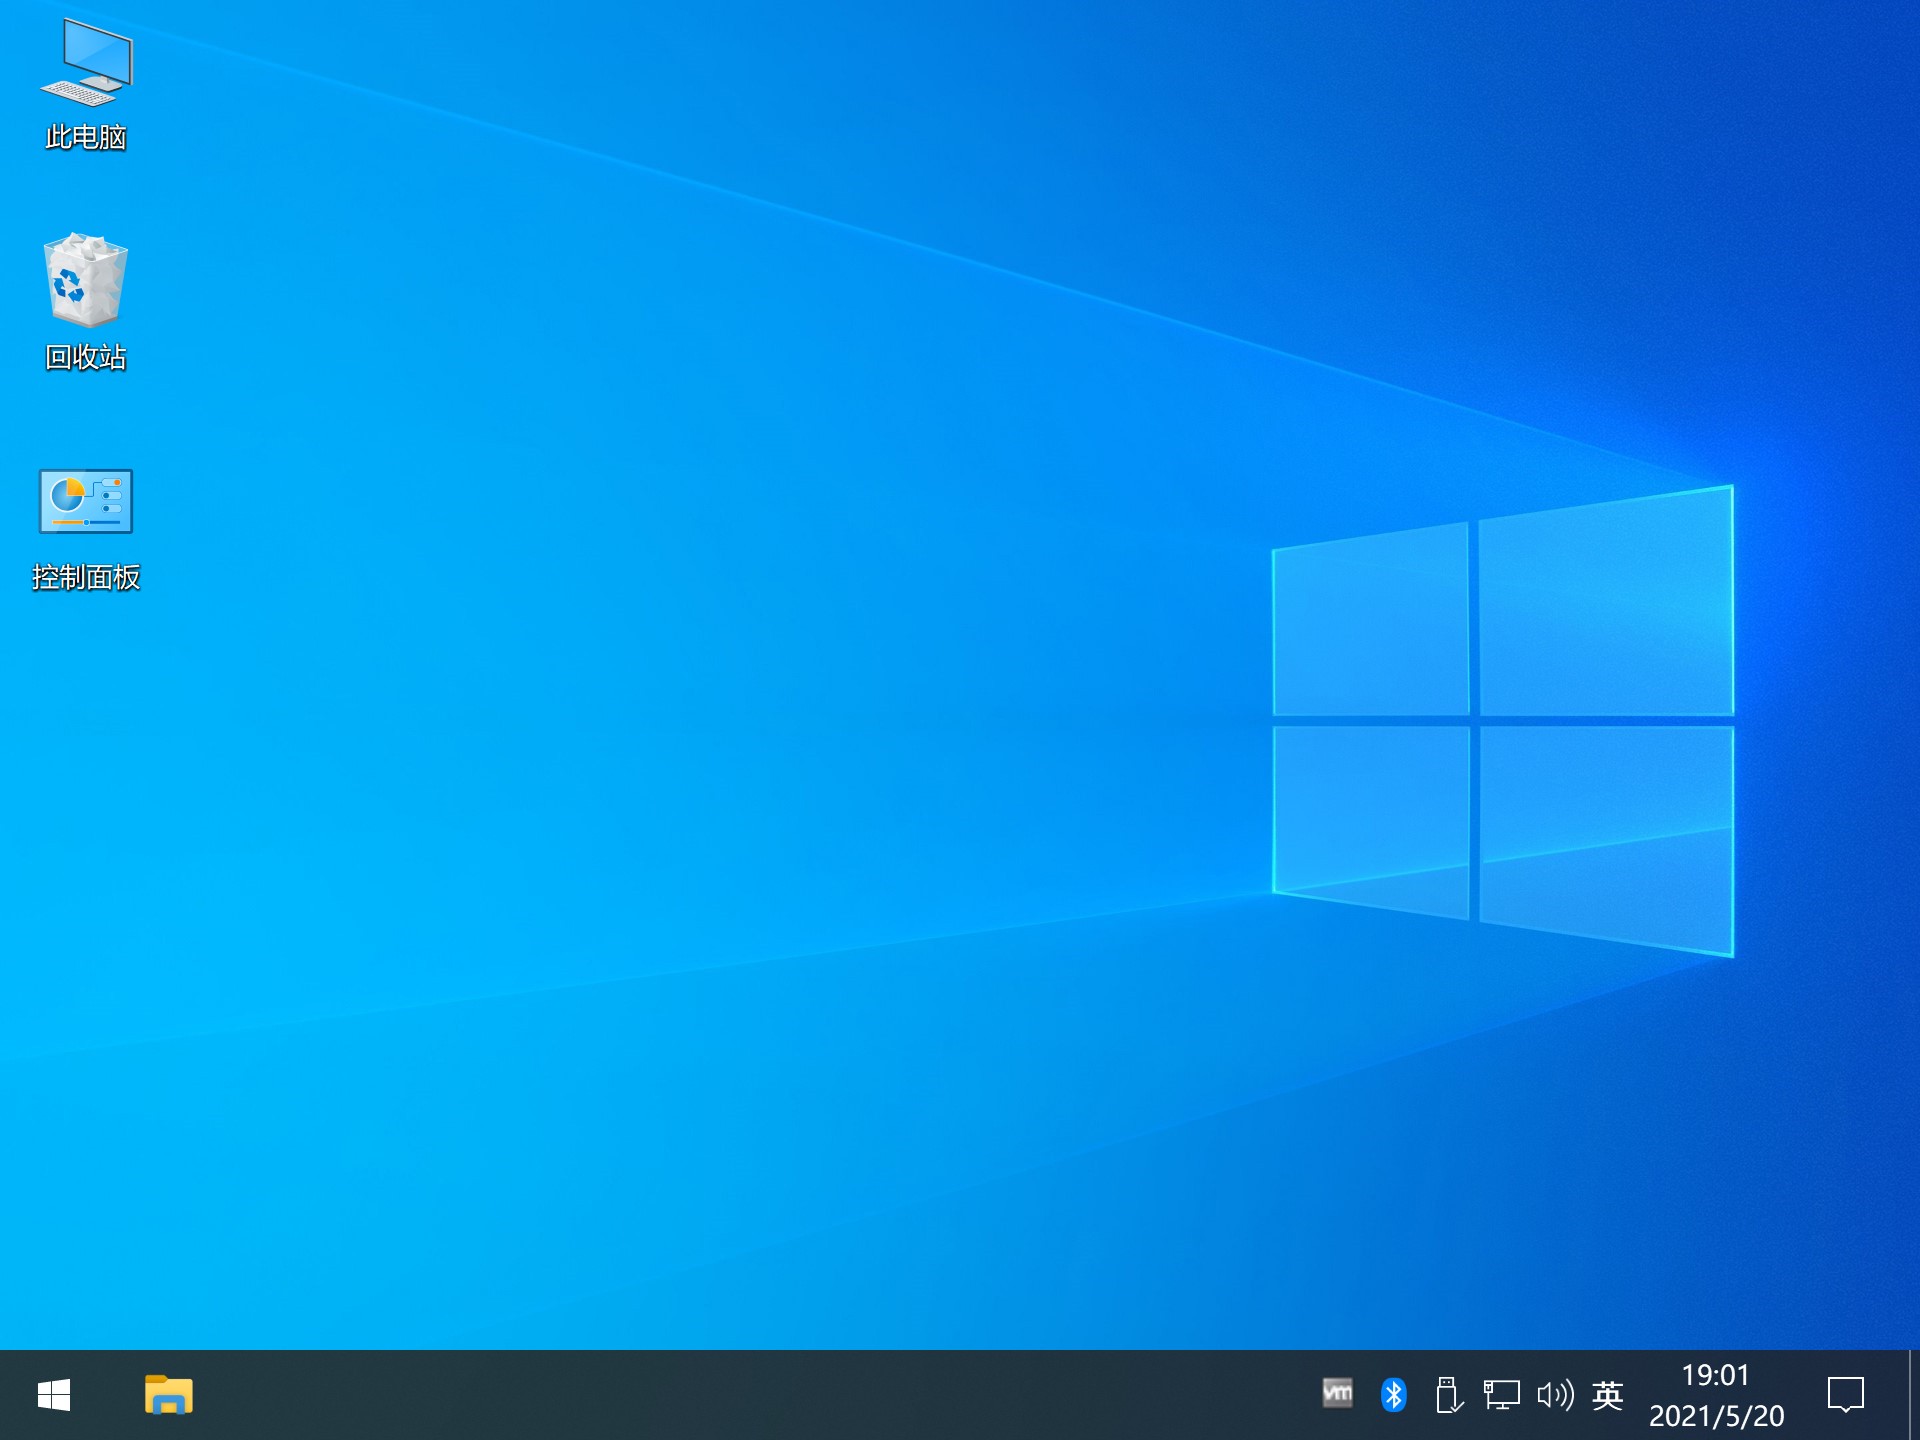 Windows 10 LTSC_2021 Build 19044.2728